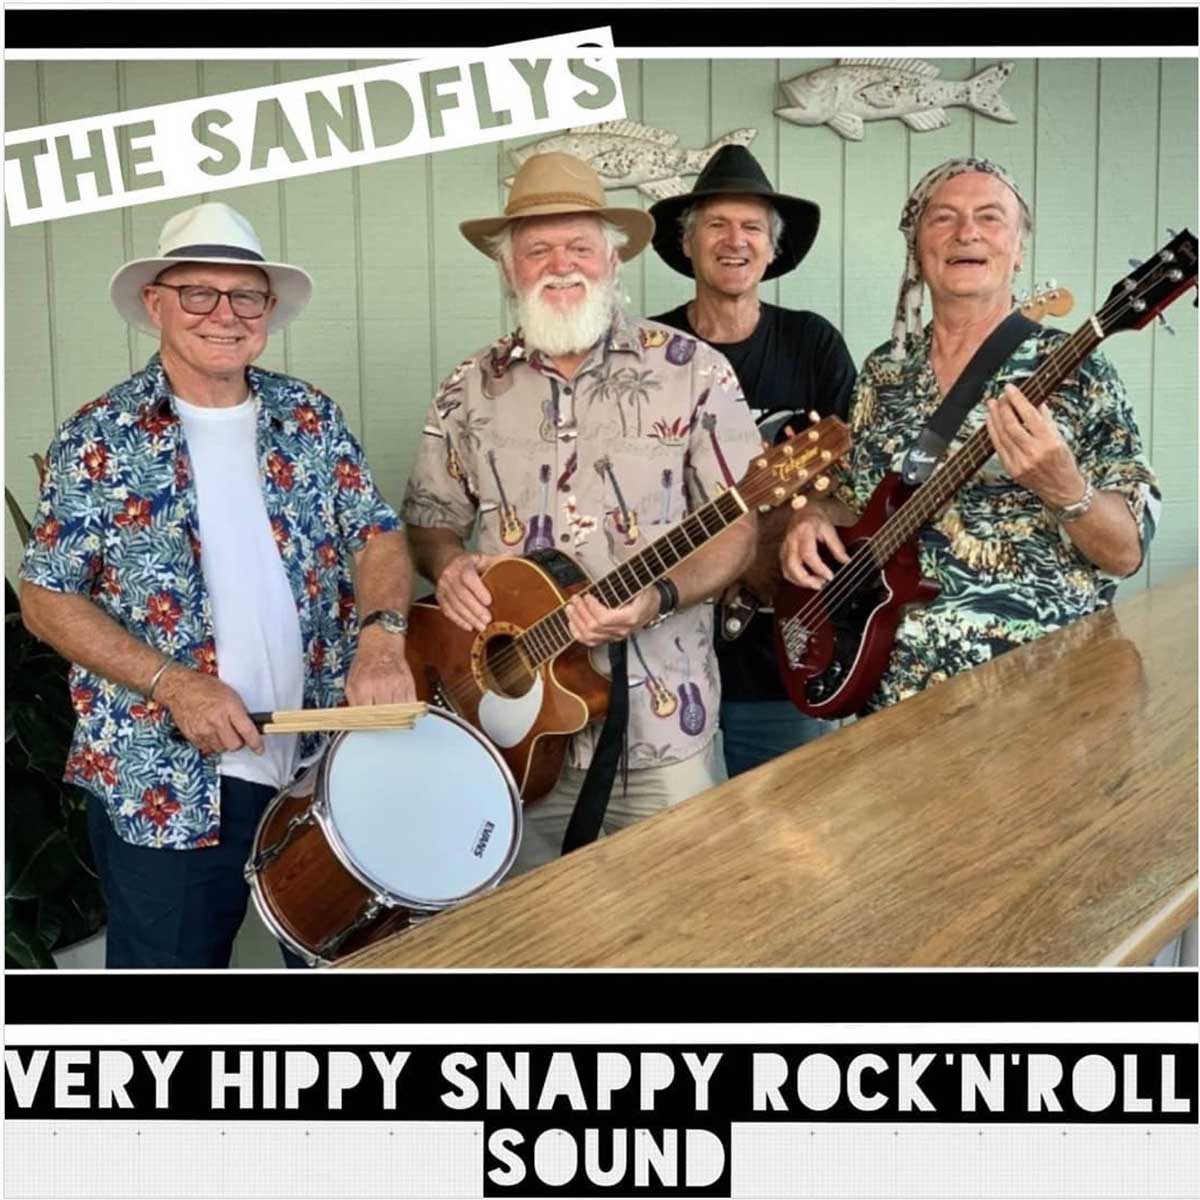 The SandFlys band